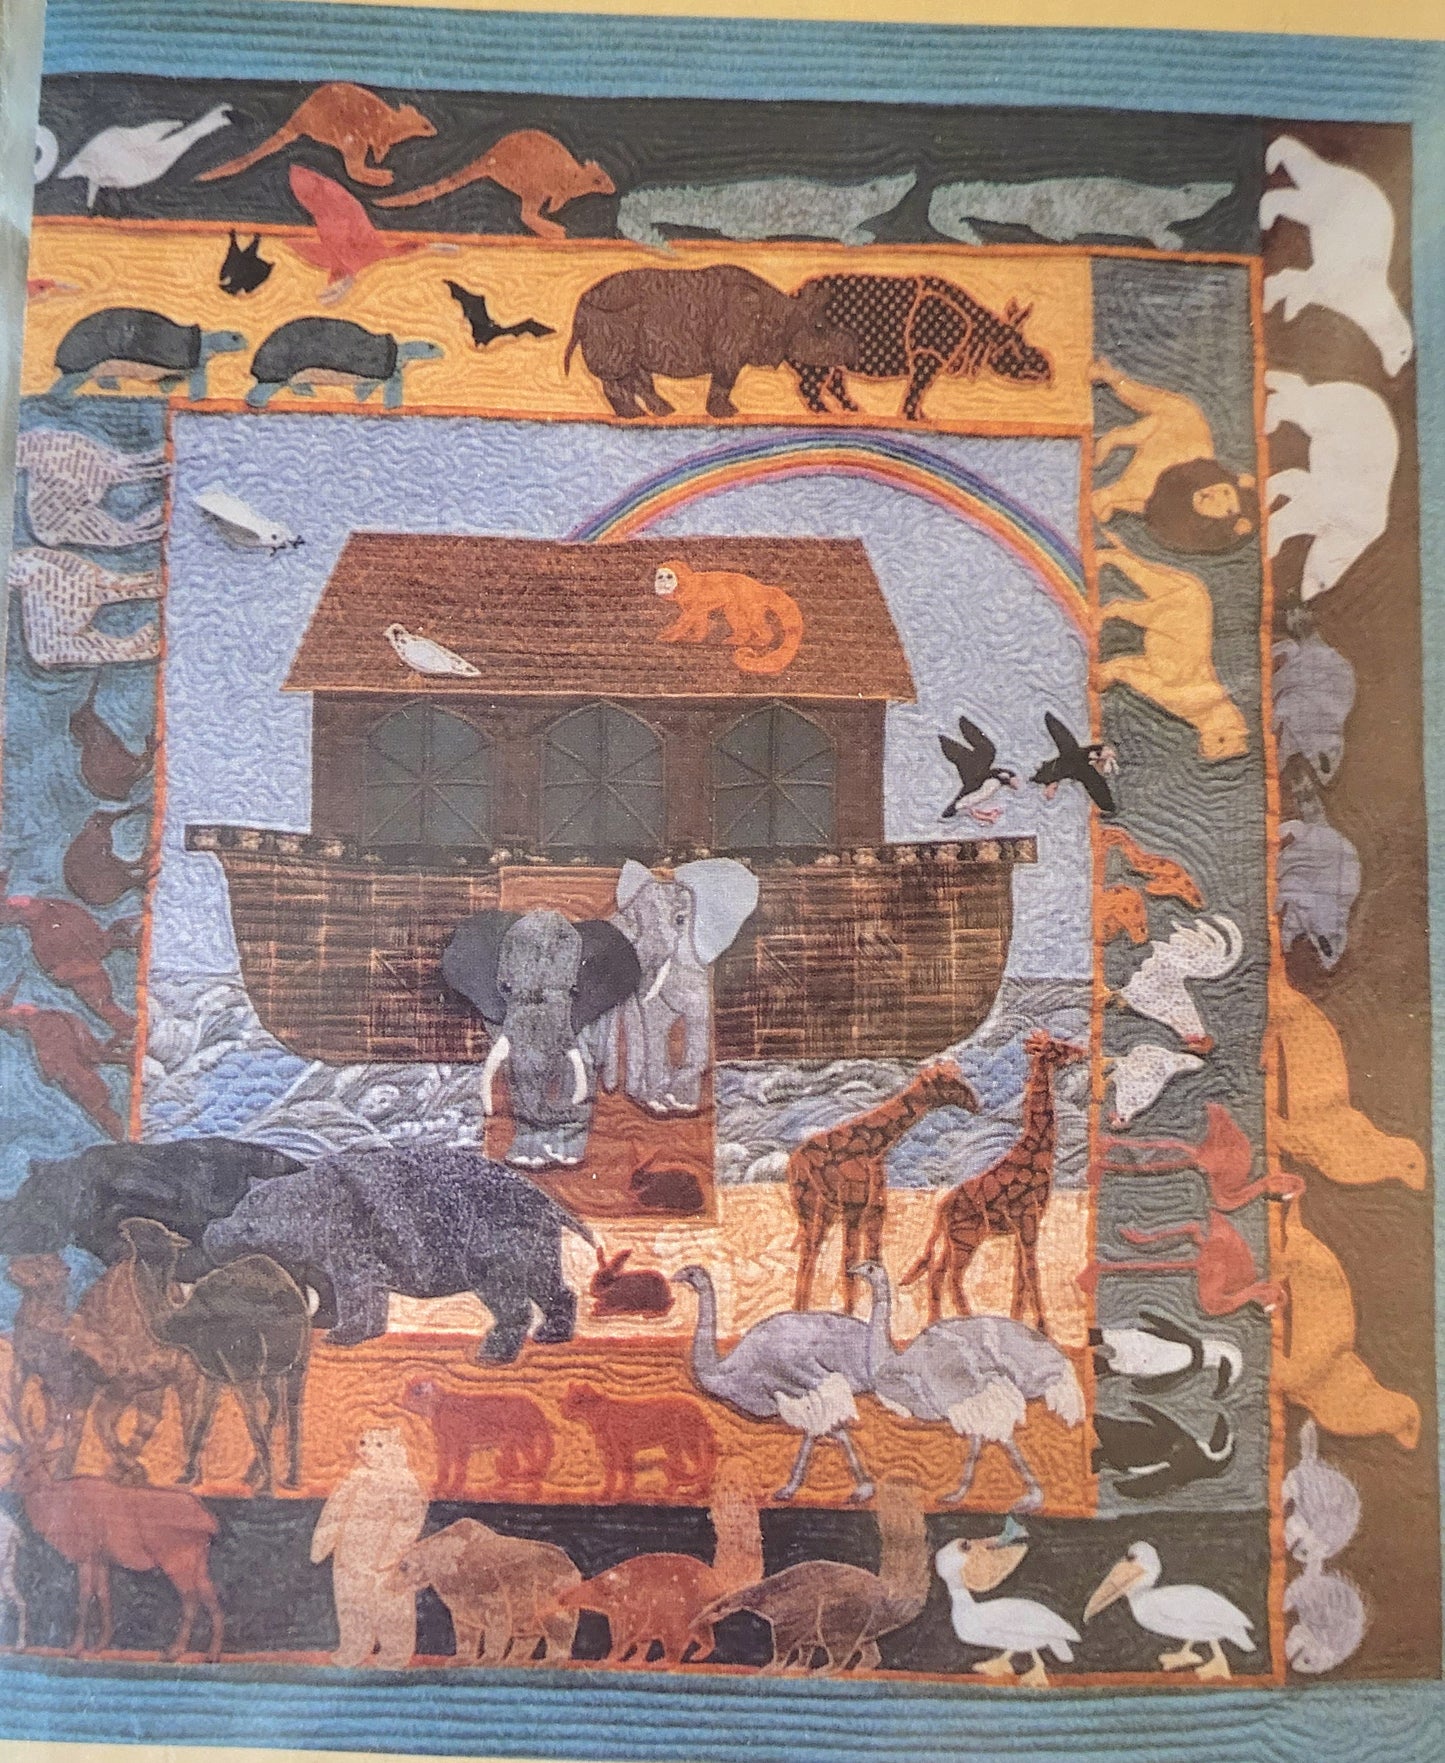 "Noah's Ark" Machine Applique Critter Pattern Works #9501